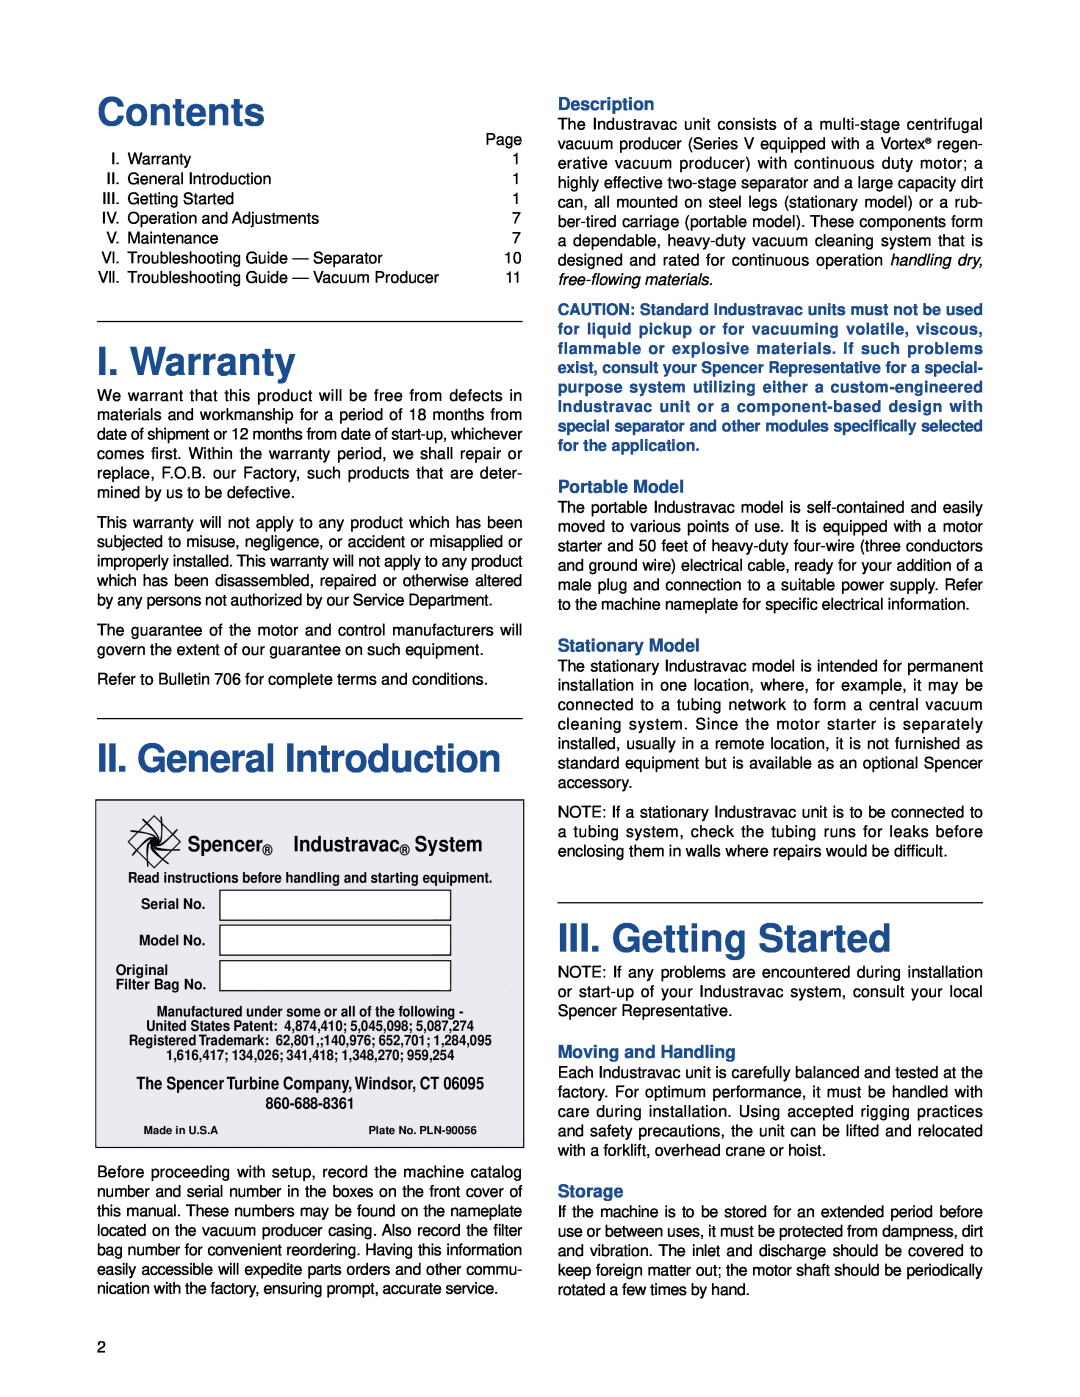 Windsor Model B Contents, I. Warranty, II. General Introduction, III. Getting Started, Spencer Industravac System, Storage 